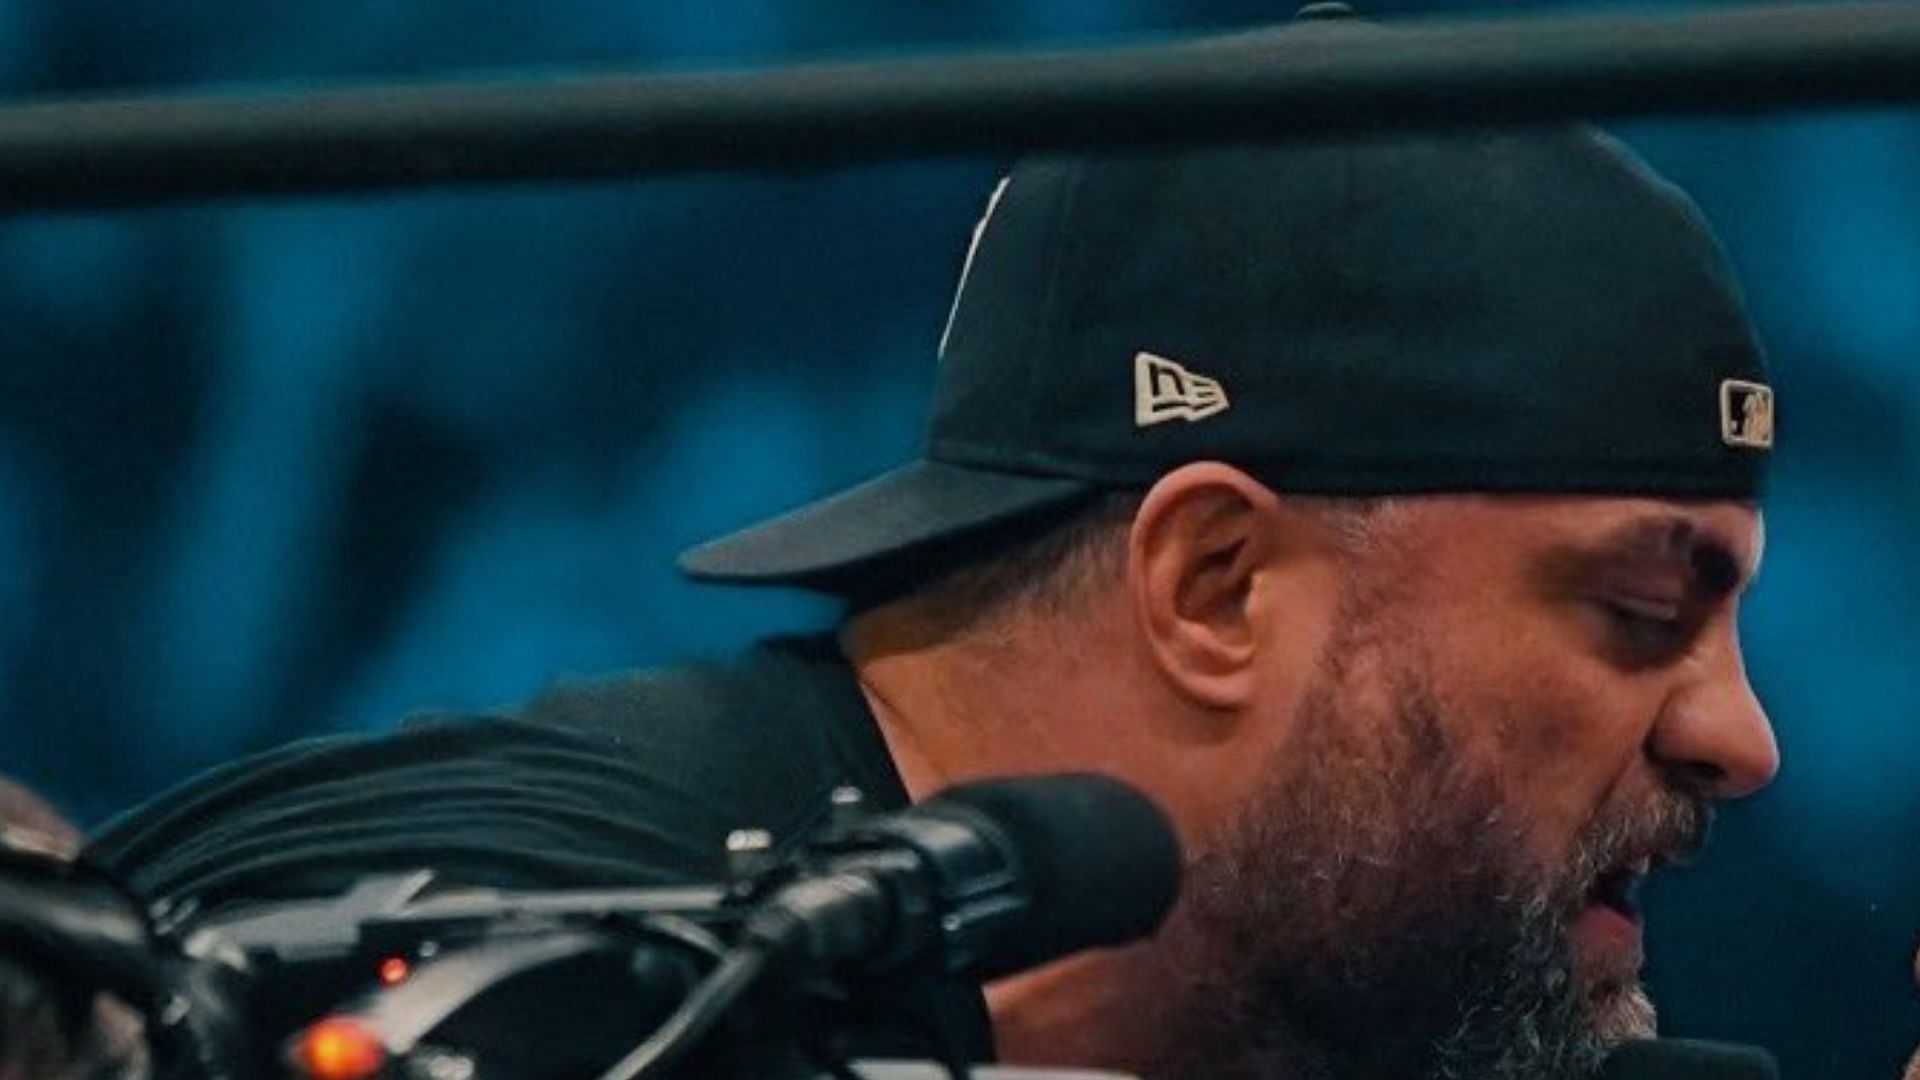 Eddie Kingston cutting a promo at an AEW event.